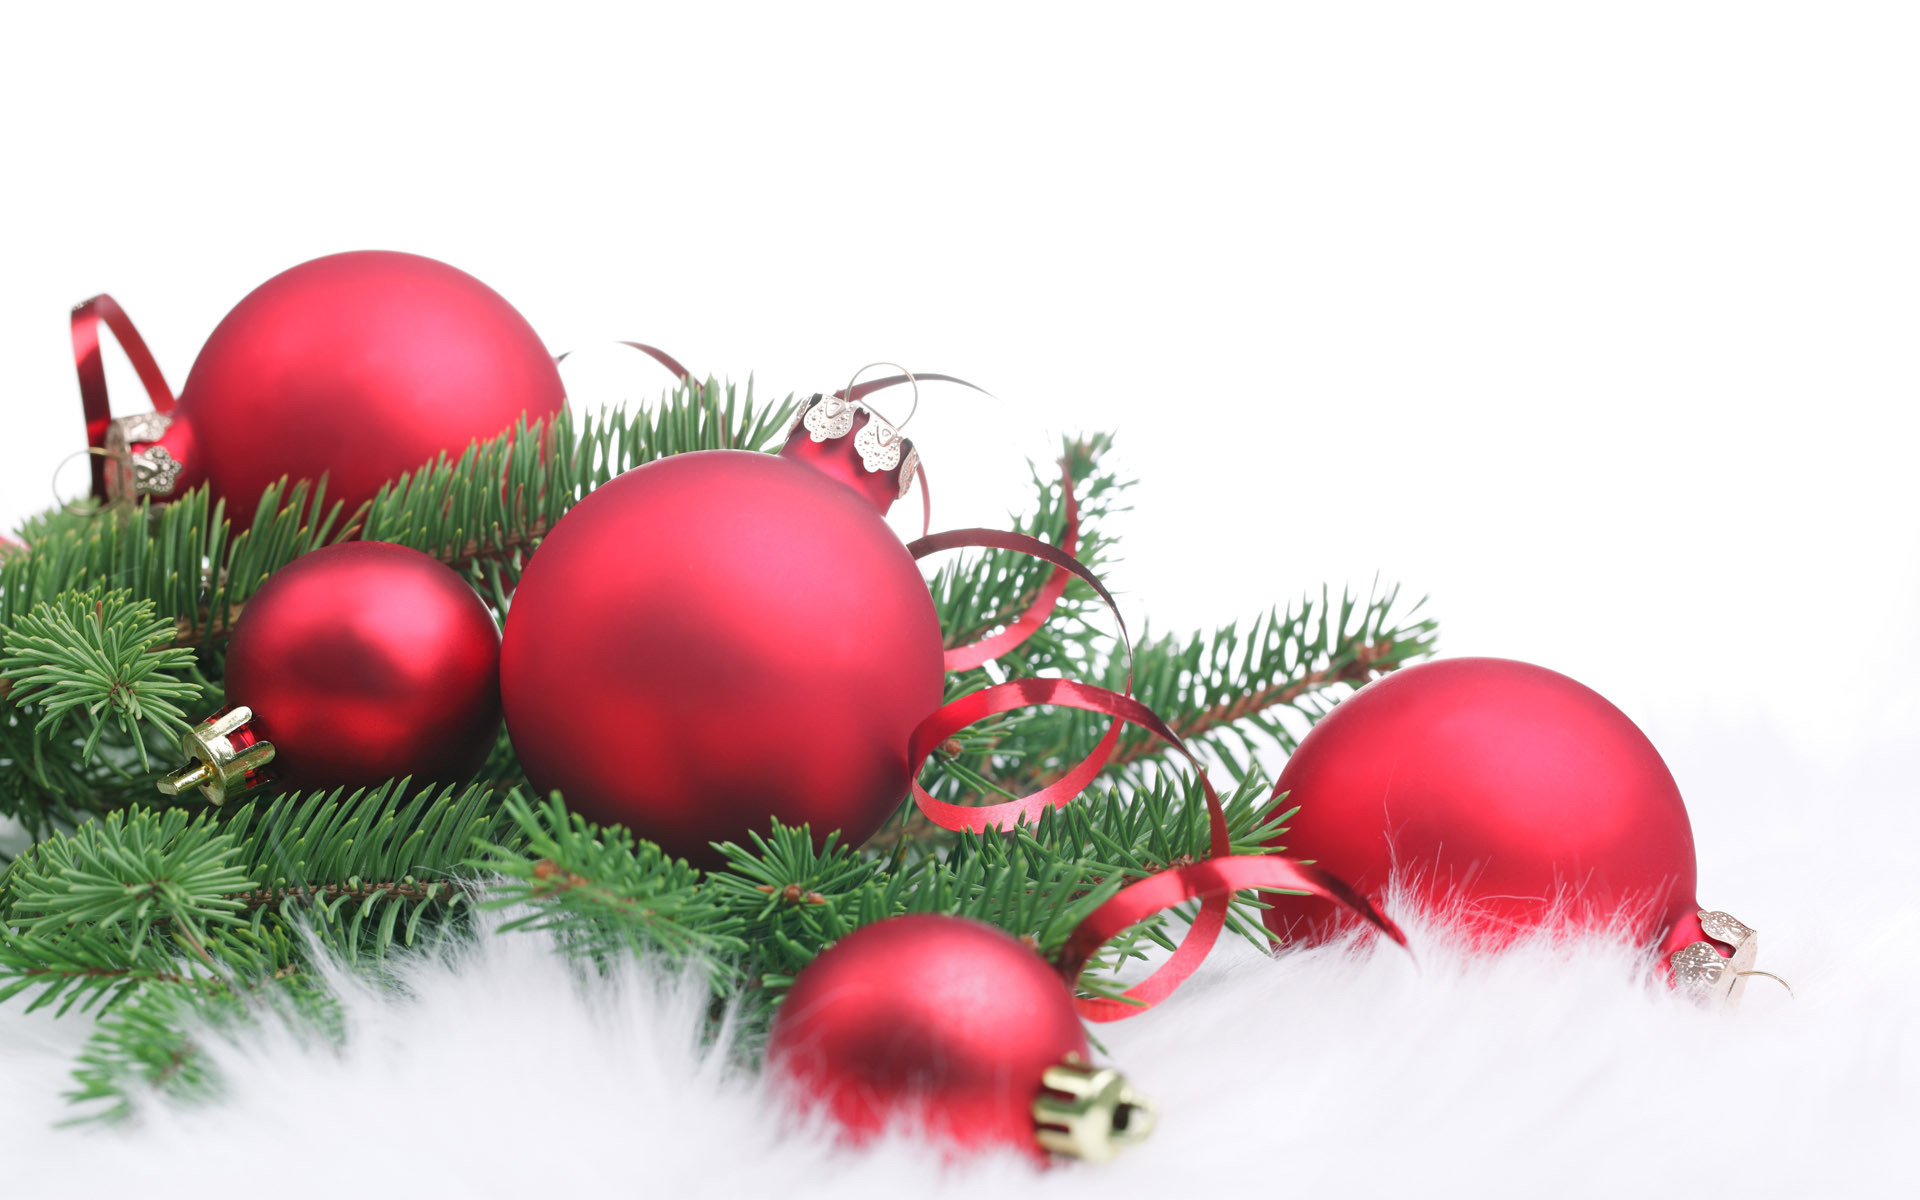 Red Christmas decorations - Christmas Wallpaper (22228020) - Fanpop